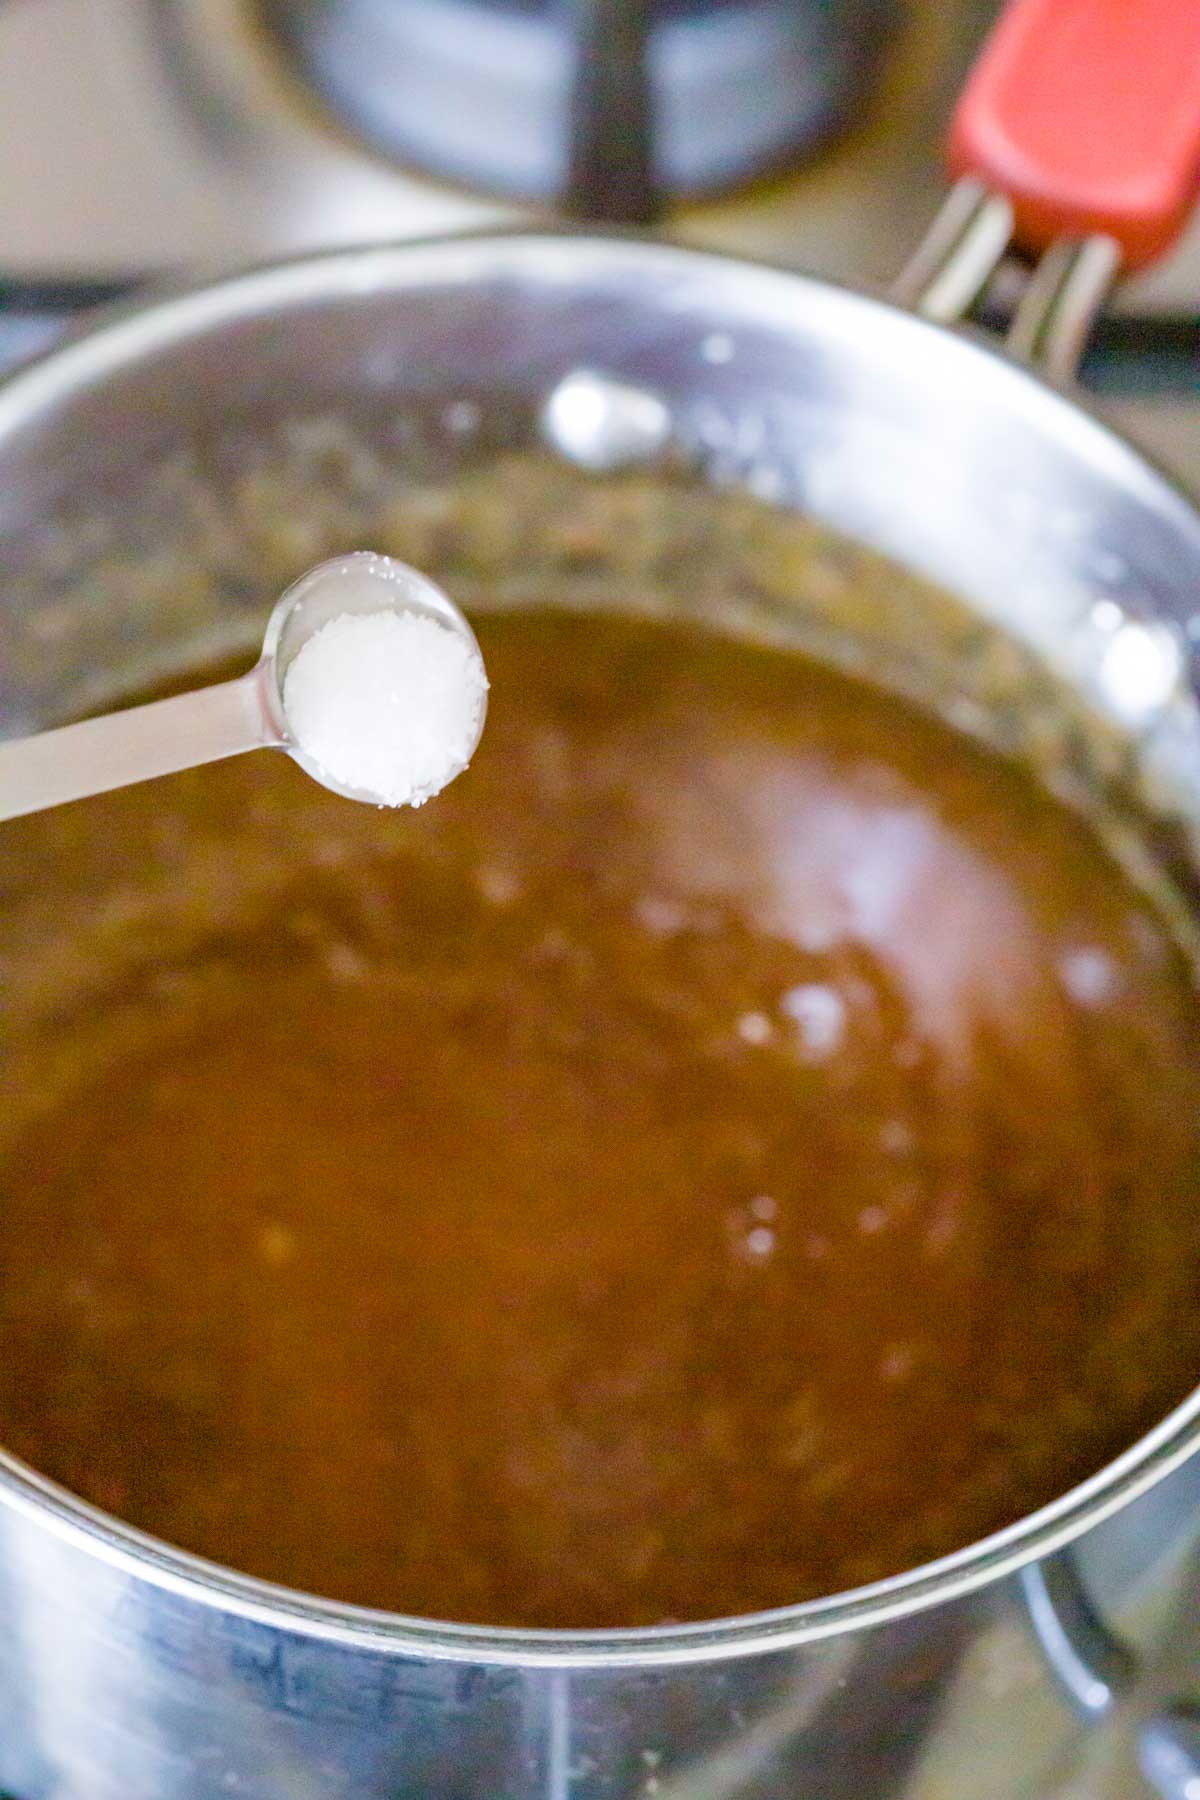 Adding cream to caramel sauce.